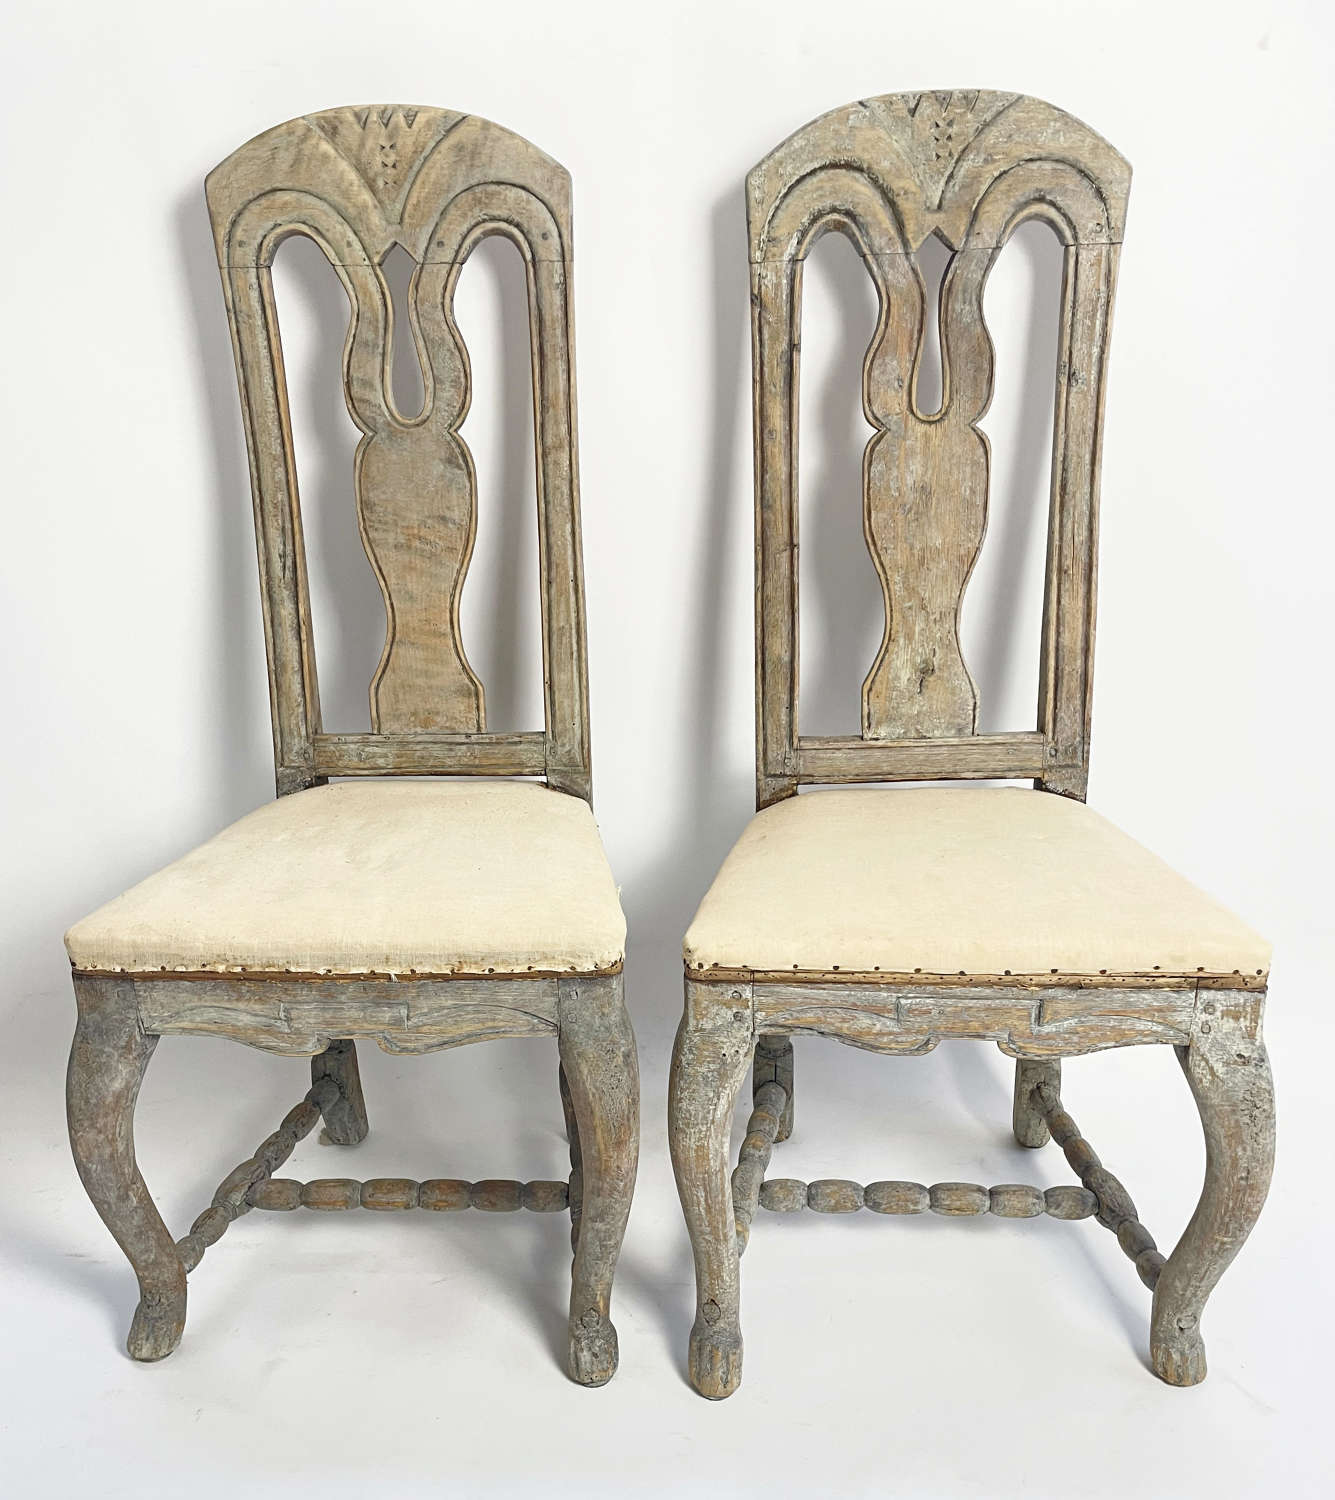 Pair of 18th century Swedish Folk Side Chairs - Circa 1750